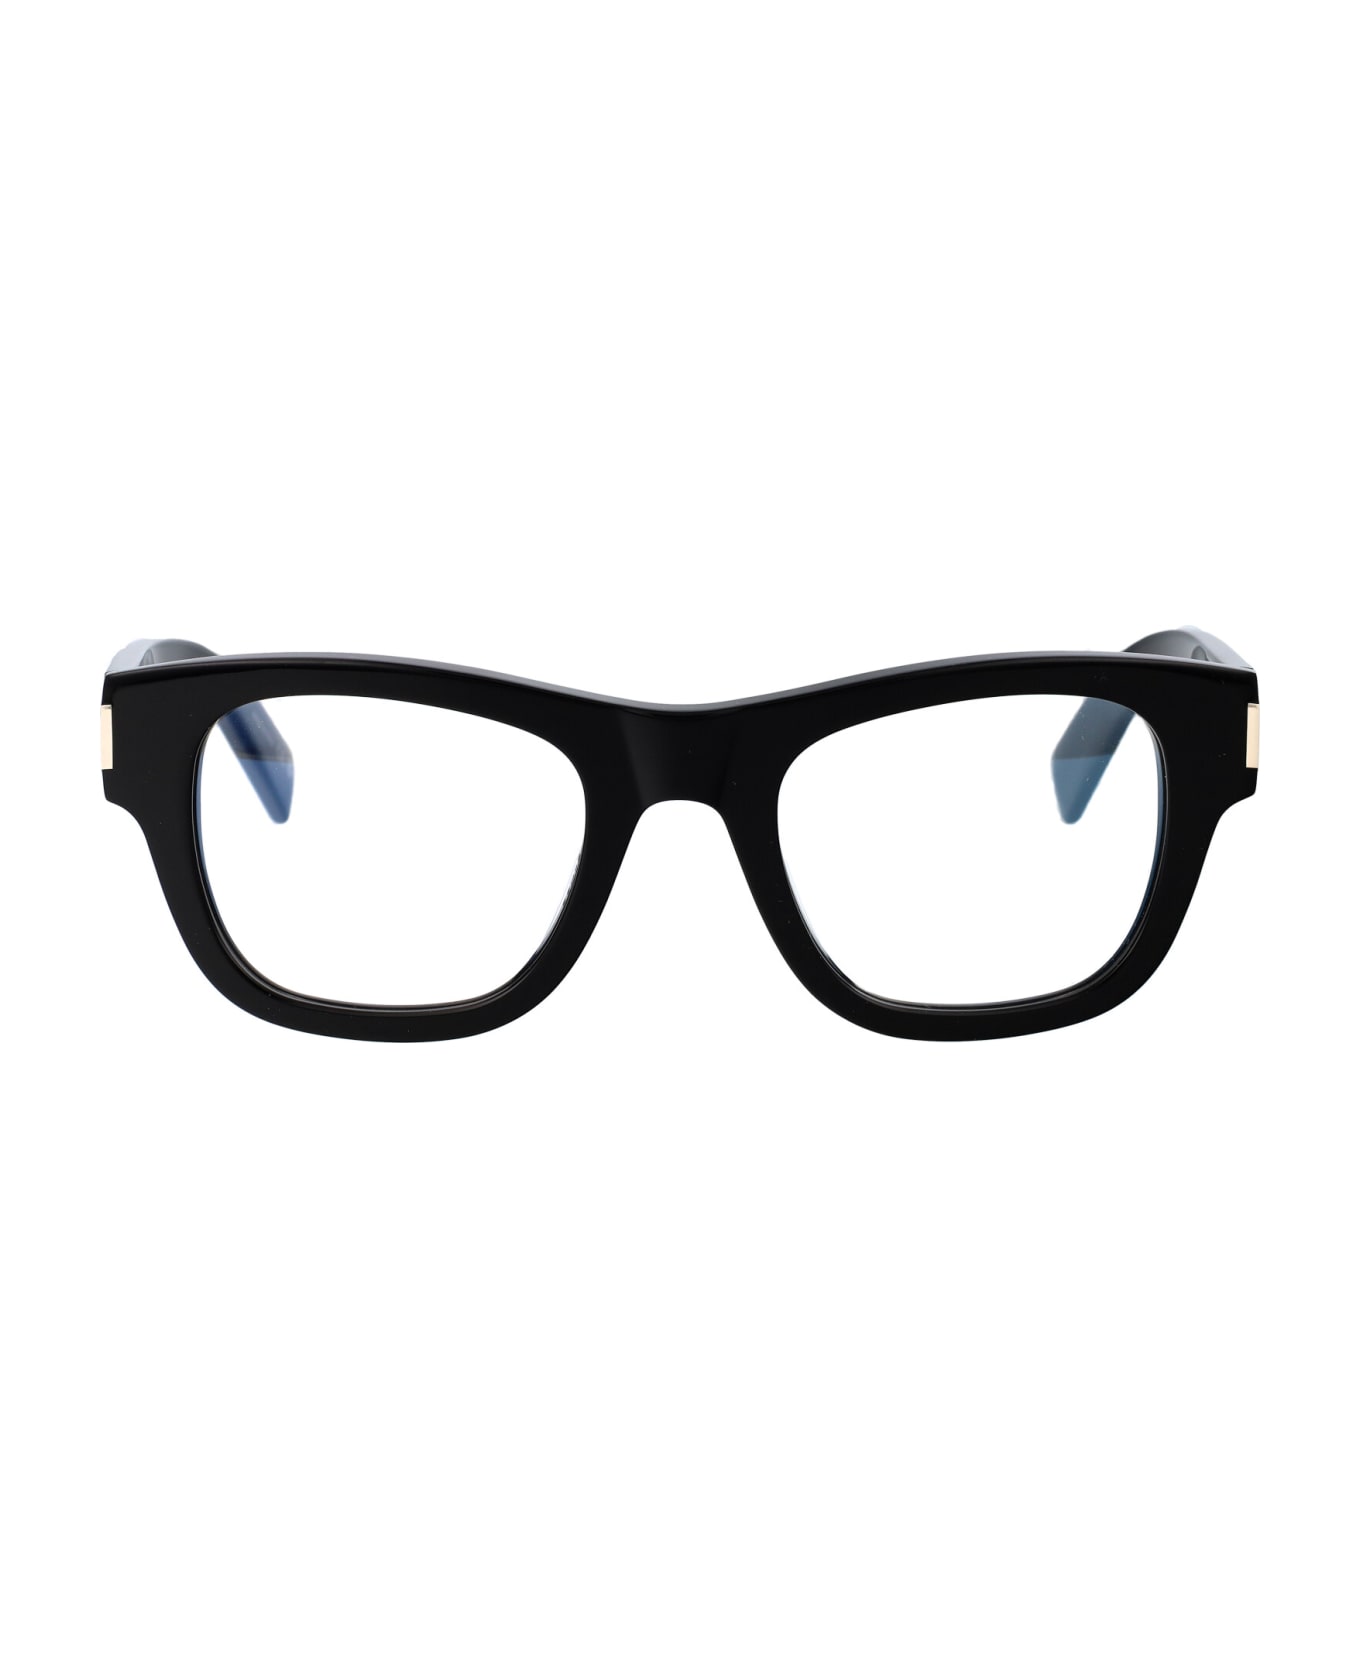 Saint Laurent Eyewear Sl 698 Glasses - 001 BLACK BLACK TRANSPARENT